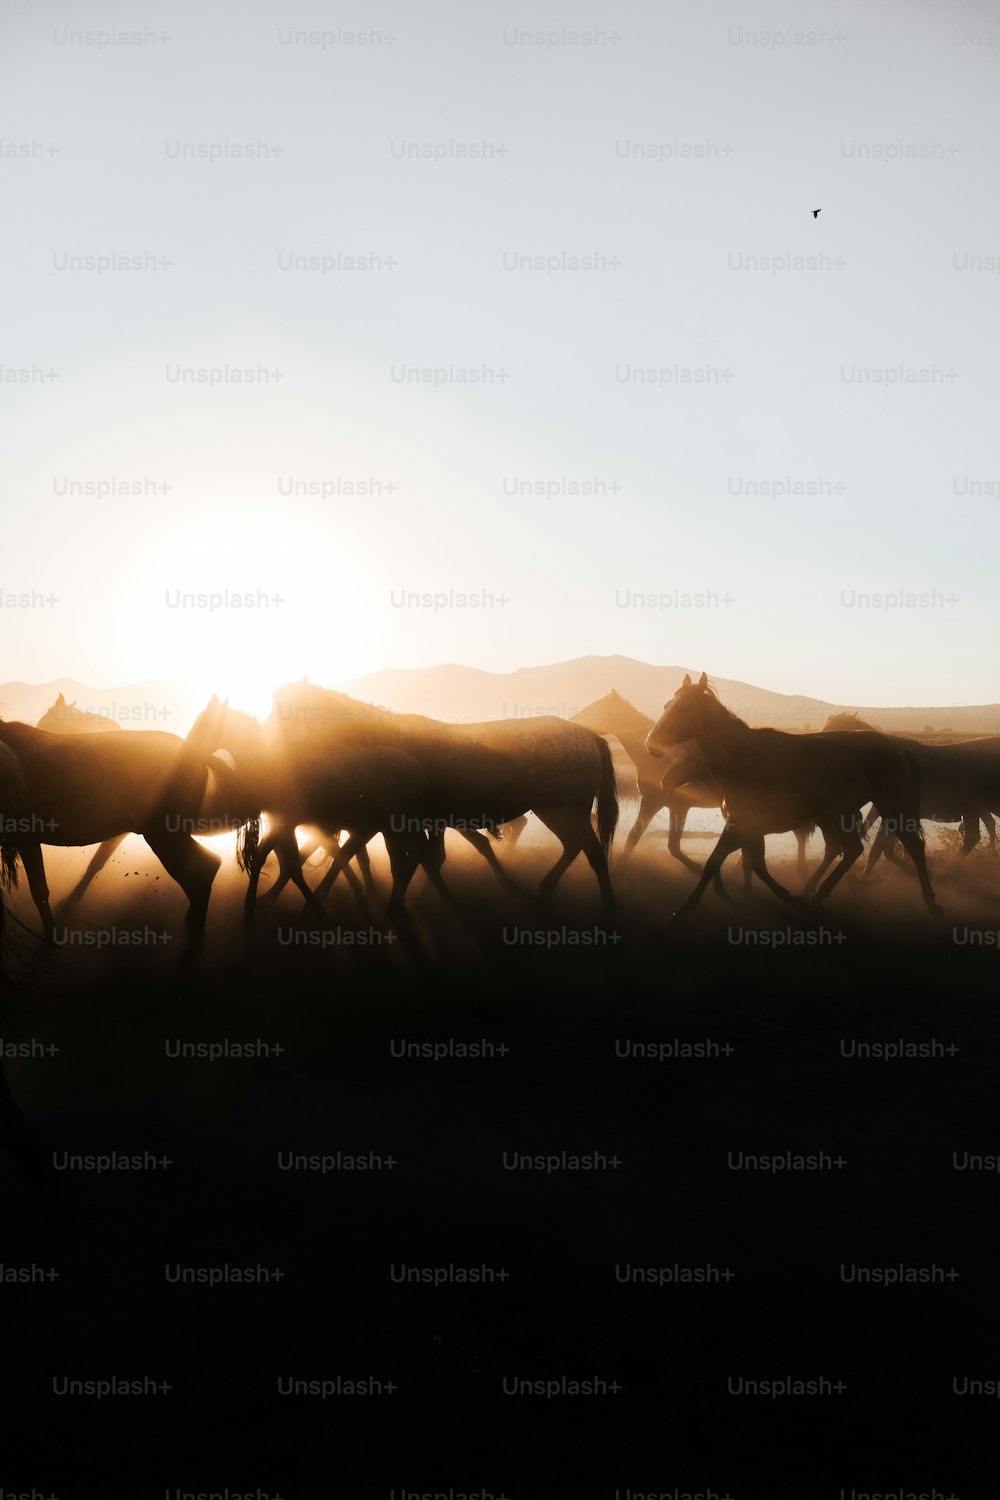 a herd of cattle walking across a grass covered field